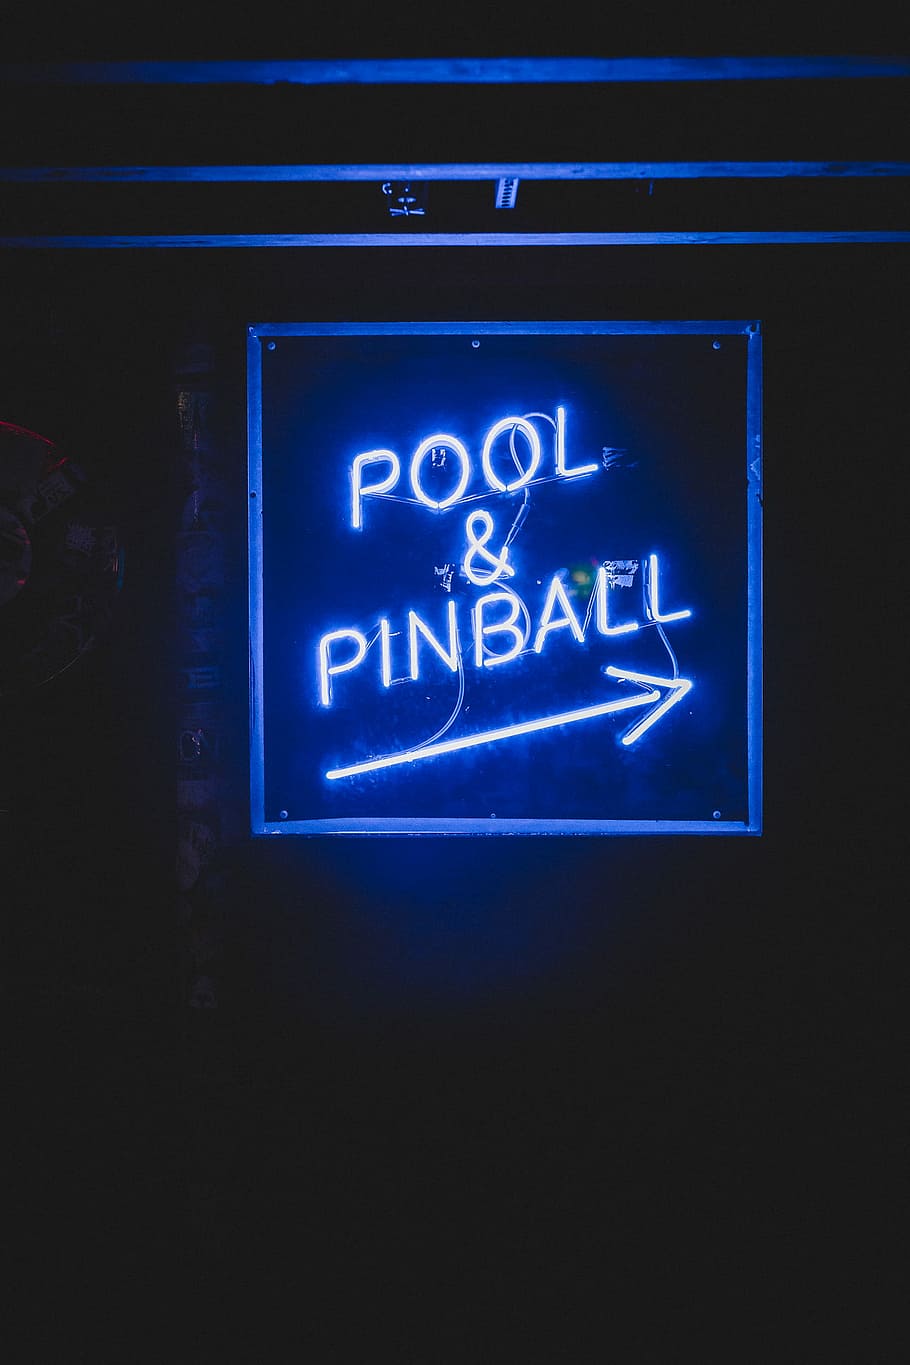 Pool & Pinball neon light signage, square blue and whit pool & pinball neon signage on dark surface